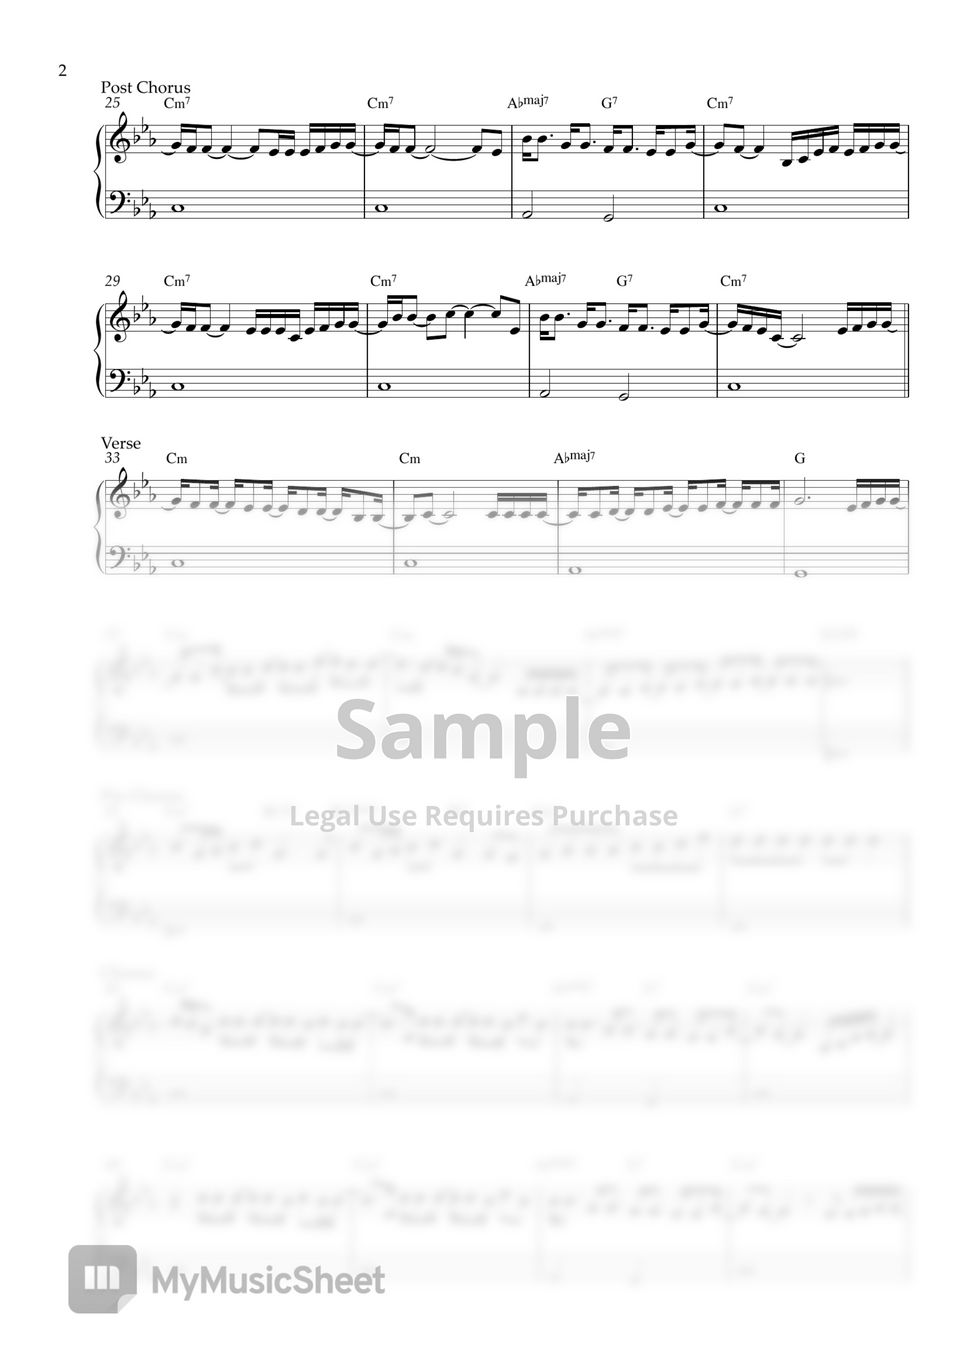 TWICE - SET ME FREE (EASY PIANO SHEET) by Pianella Piano